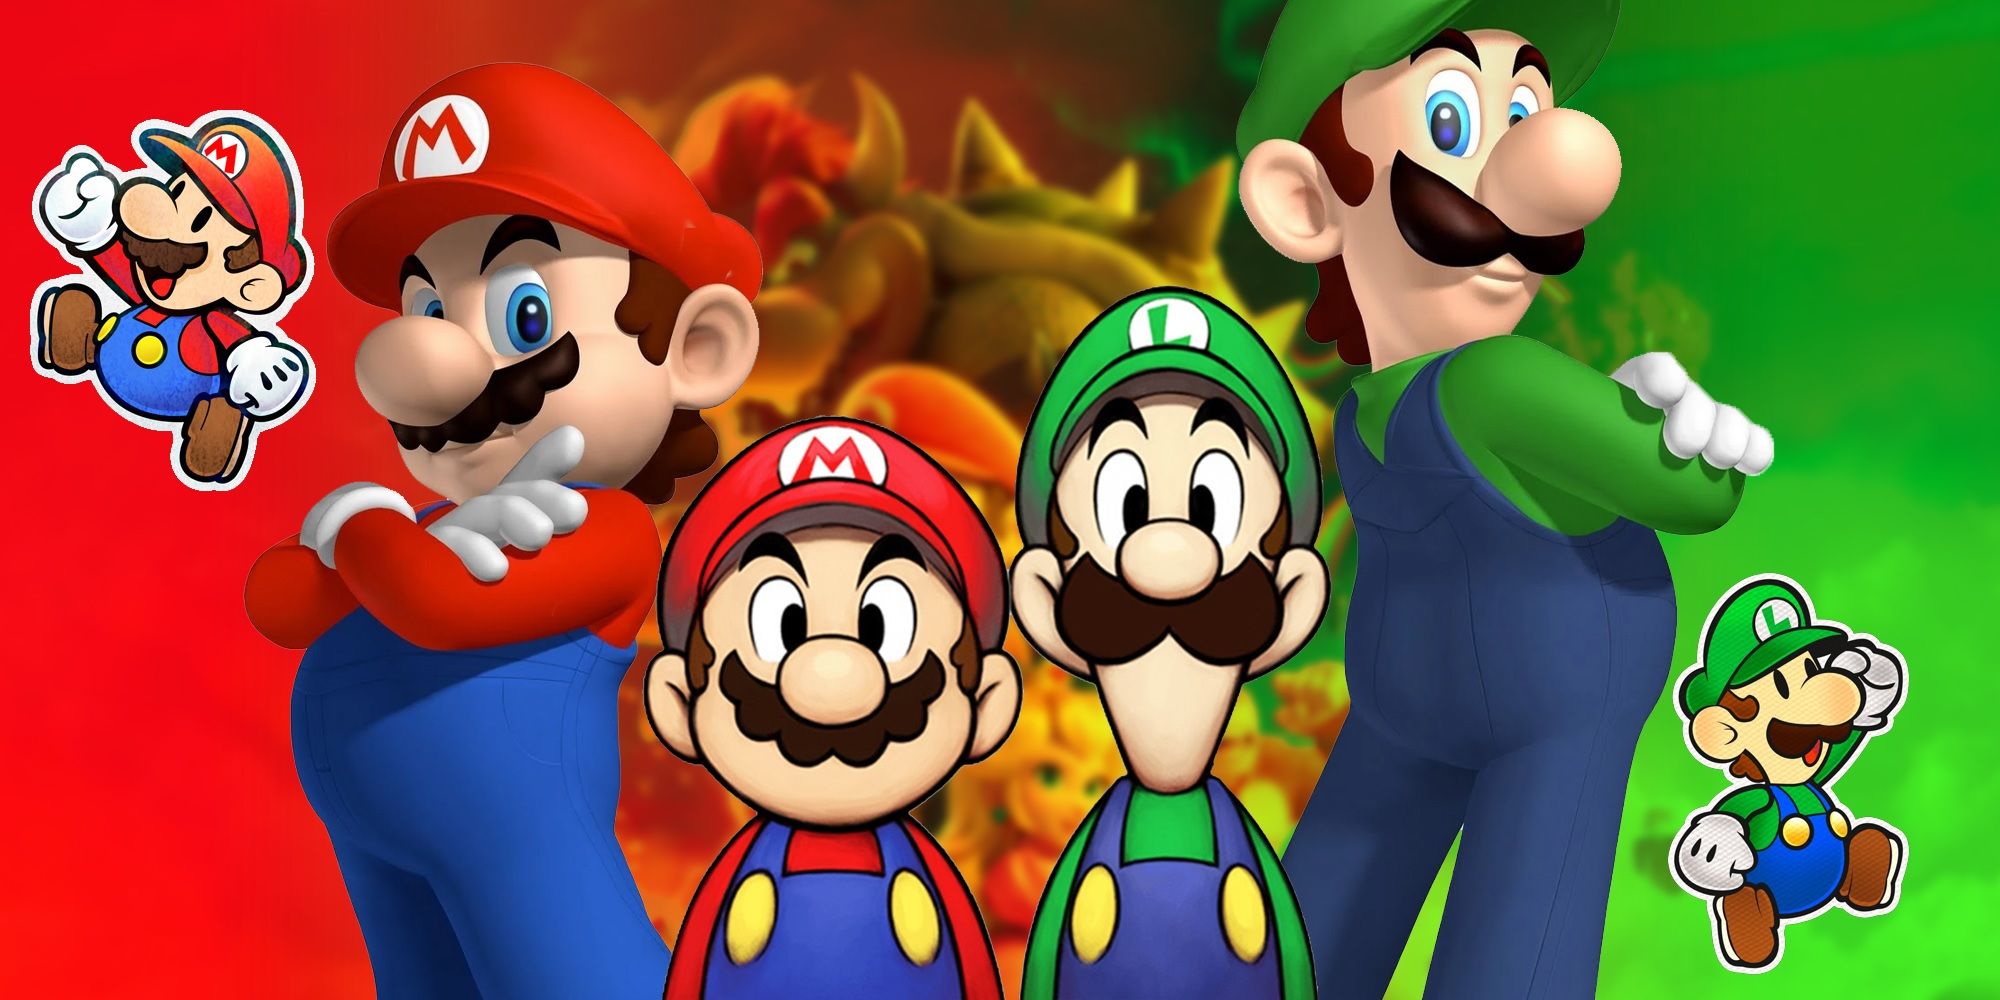 Mario and Luigi as they appear in Mario & Luigi and Paper Mario RPGs